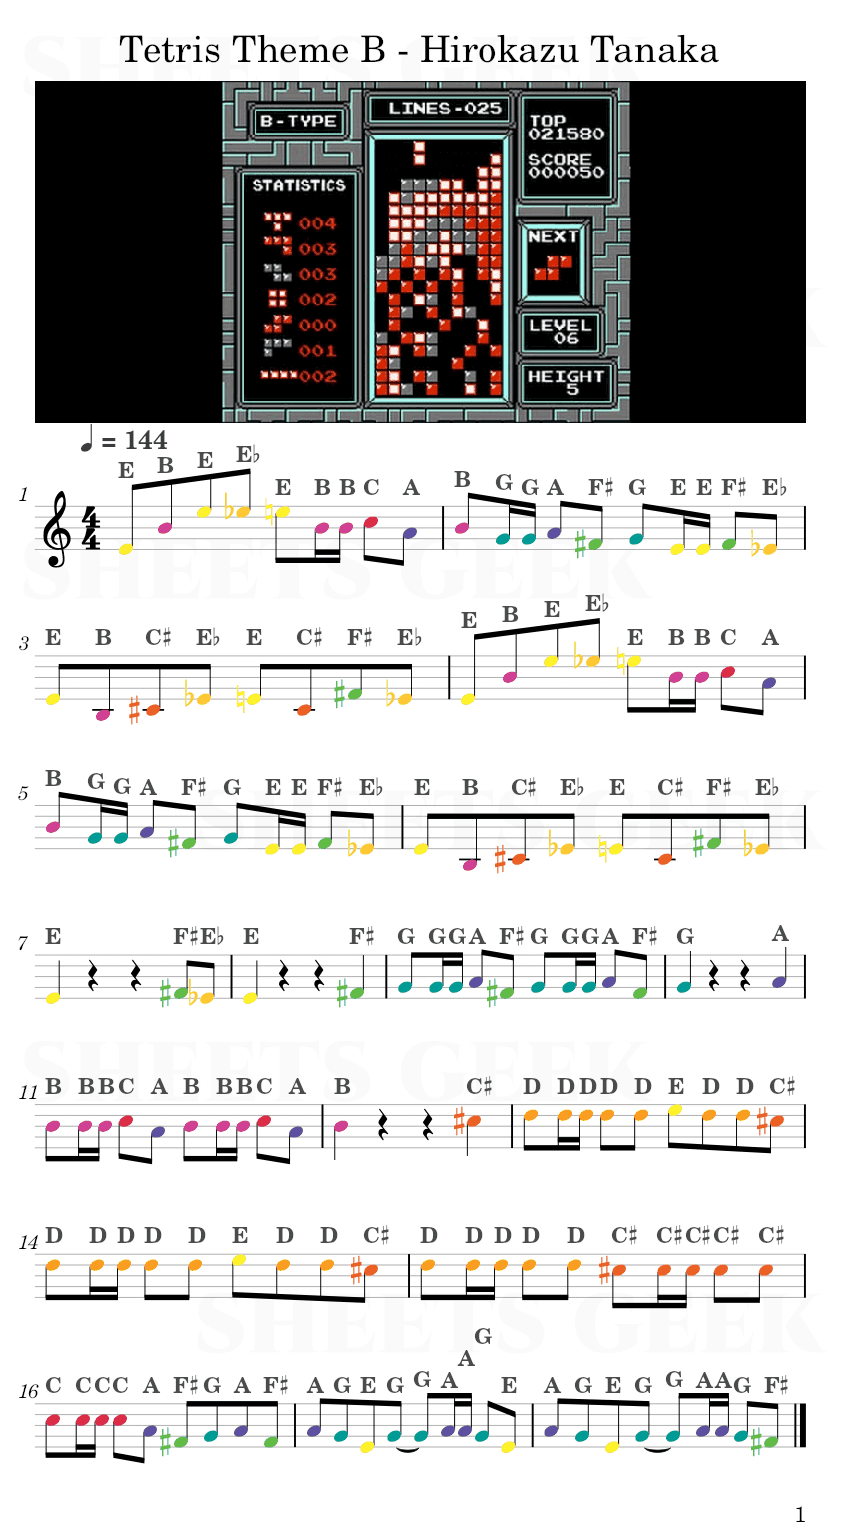 Tetris Theme B - Hirokazu Tanaka Easy Sheet Music Free for piano, keyboard, flute, violin, sax, cello page 1